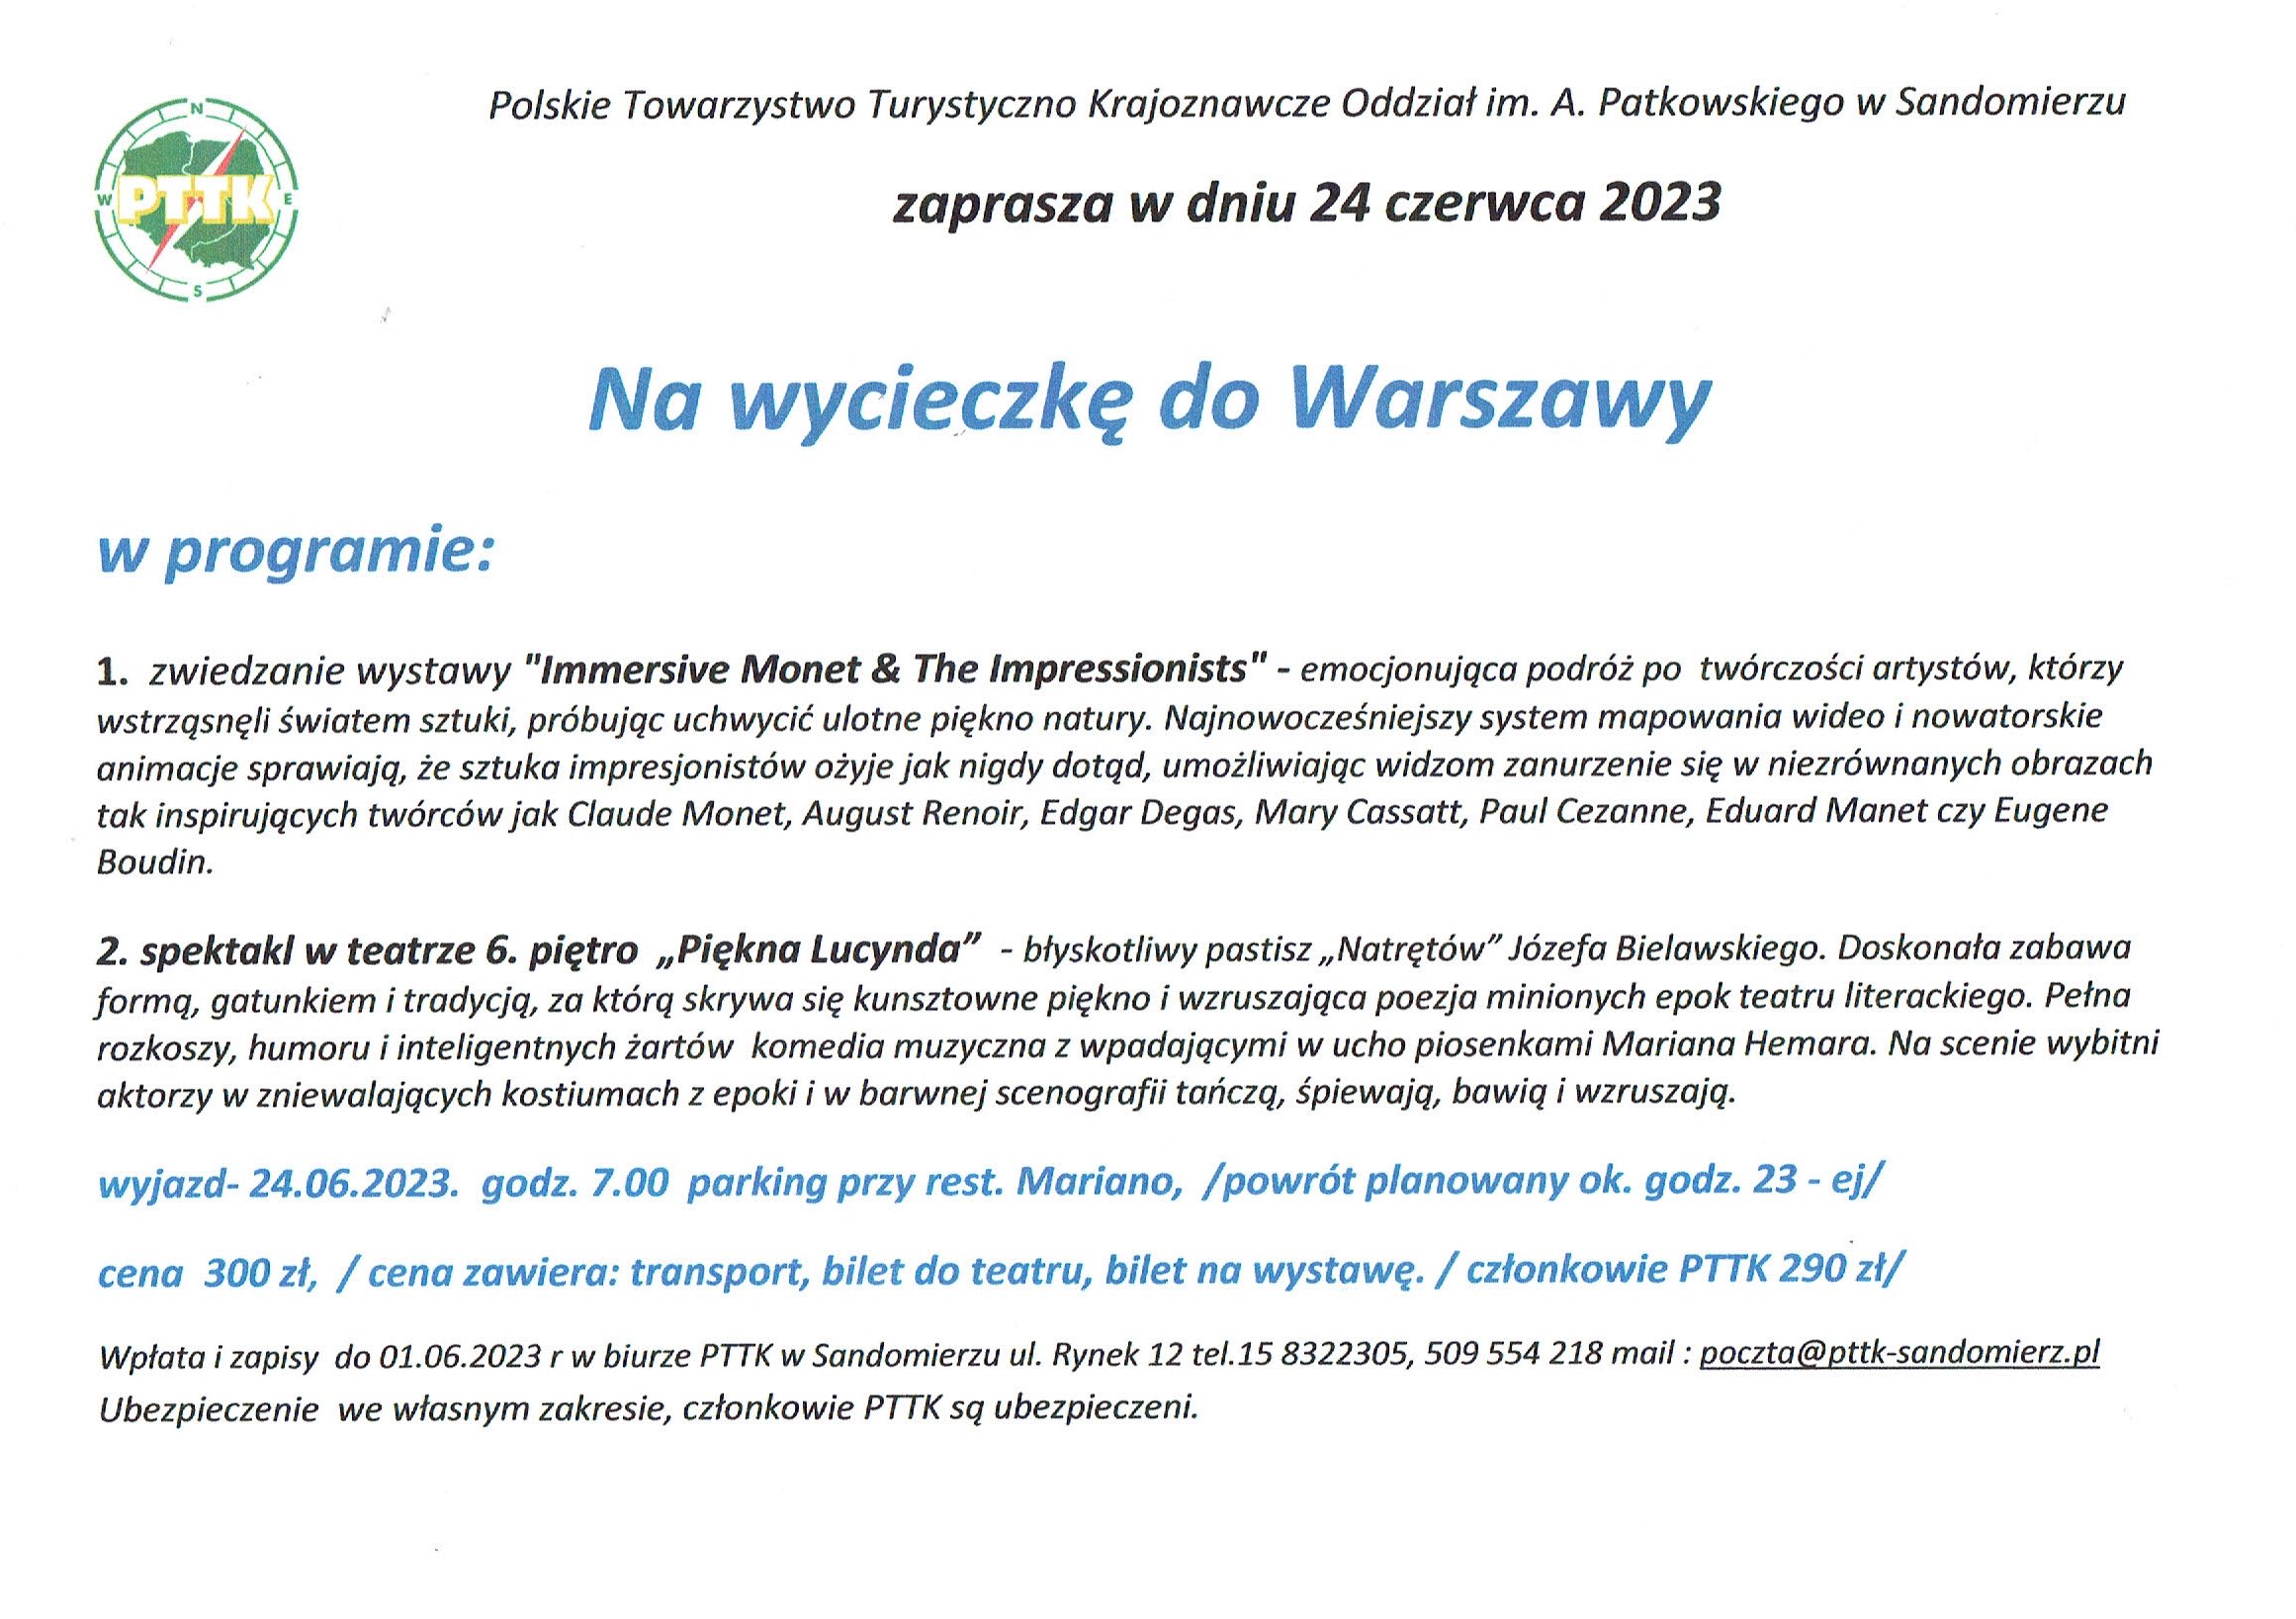 Warszawa 24.06.2023